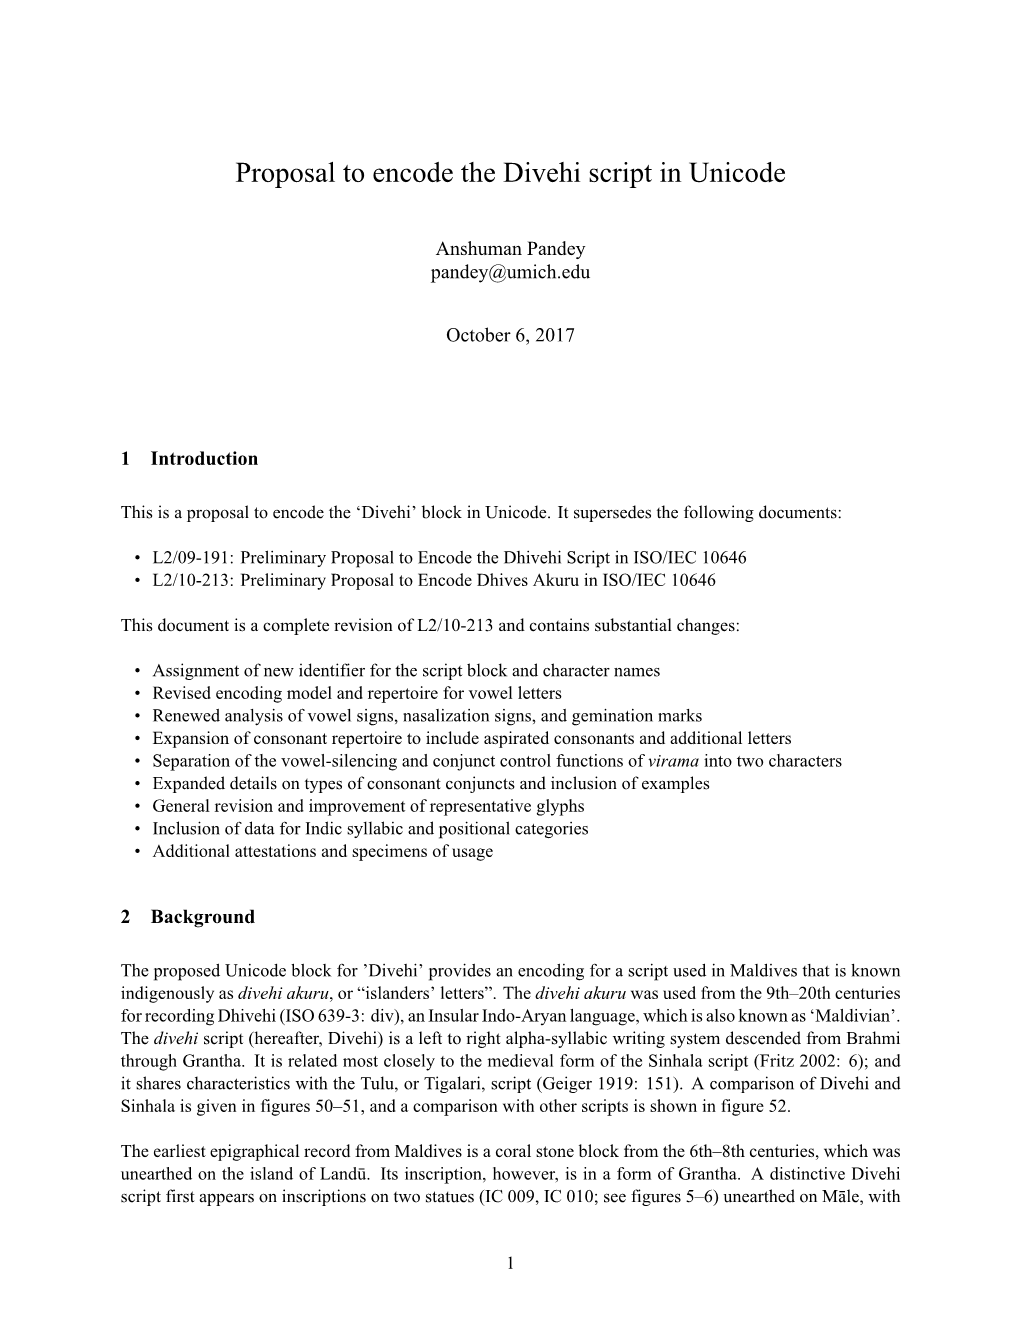 Proposal to Encode the Divehi Script in Unicode